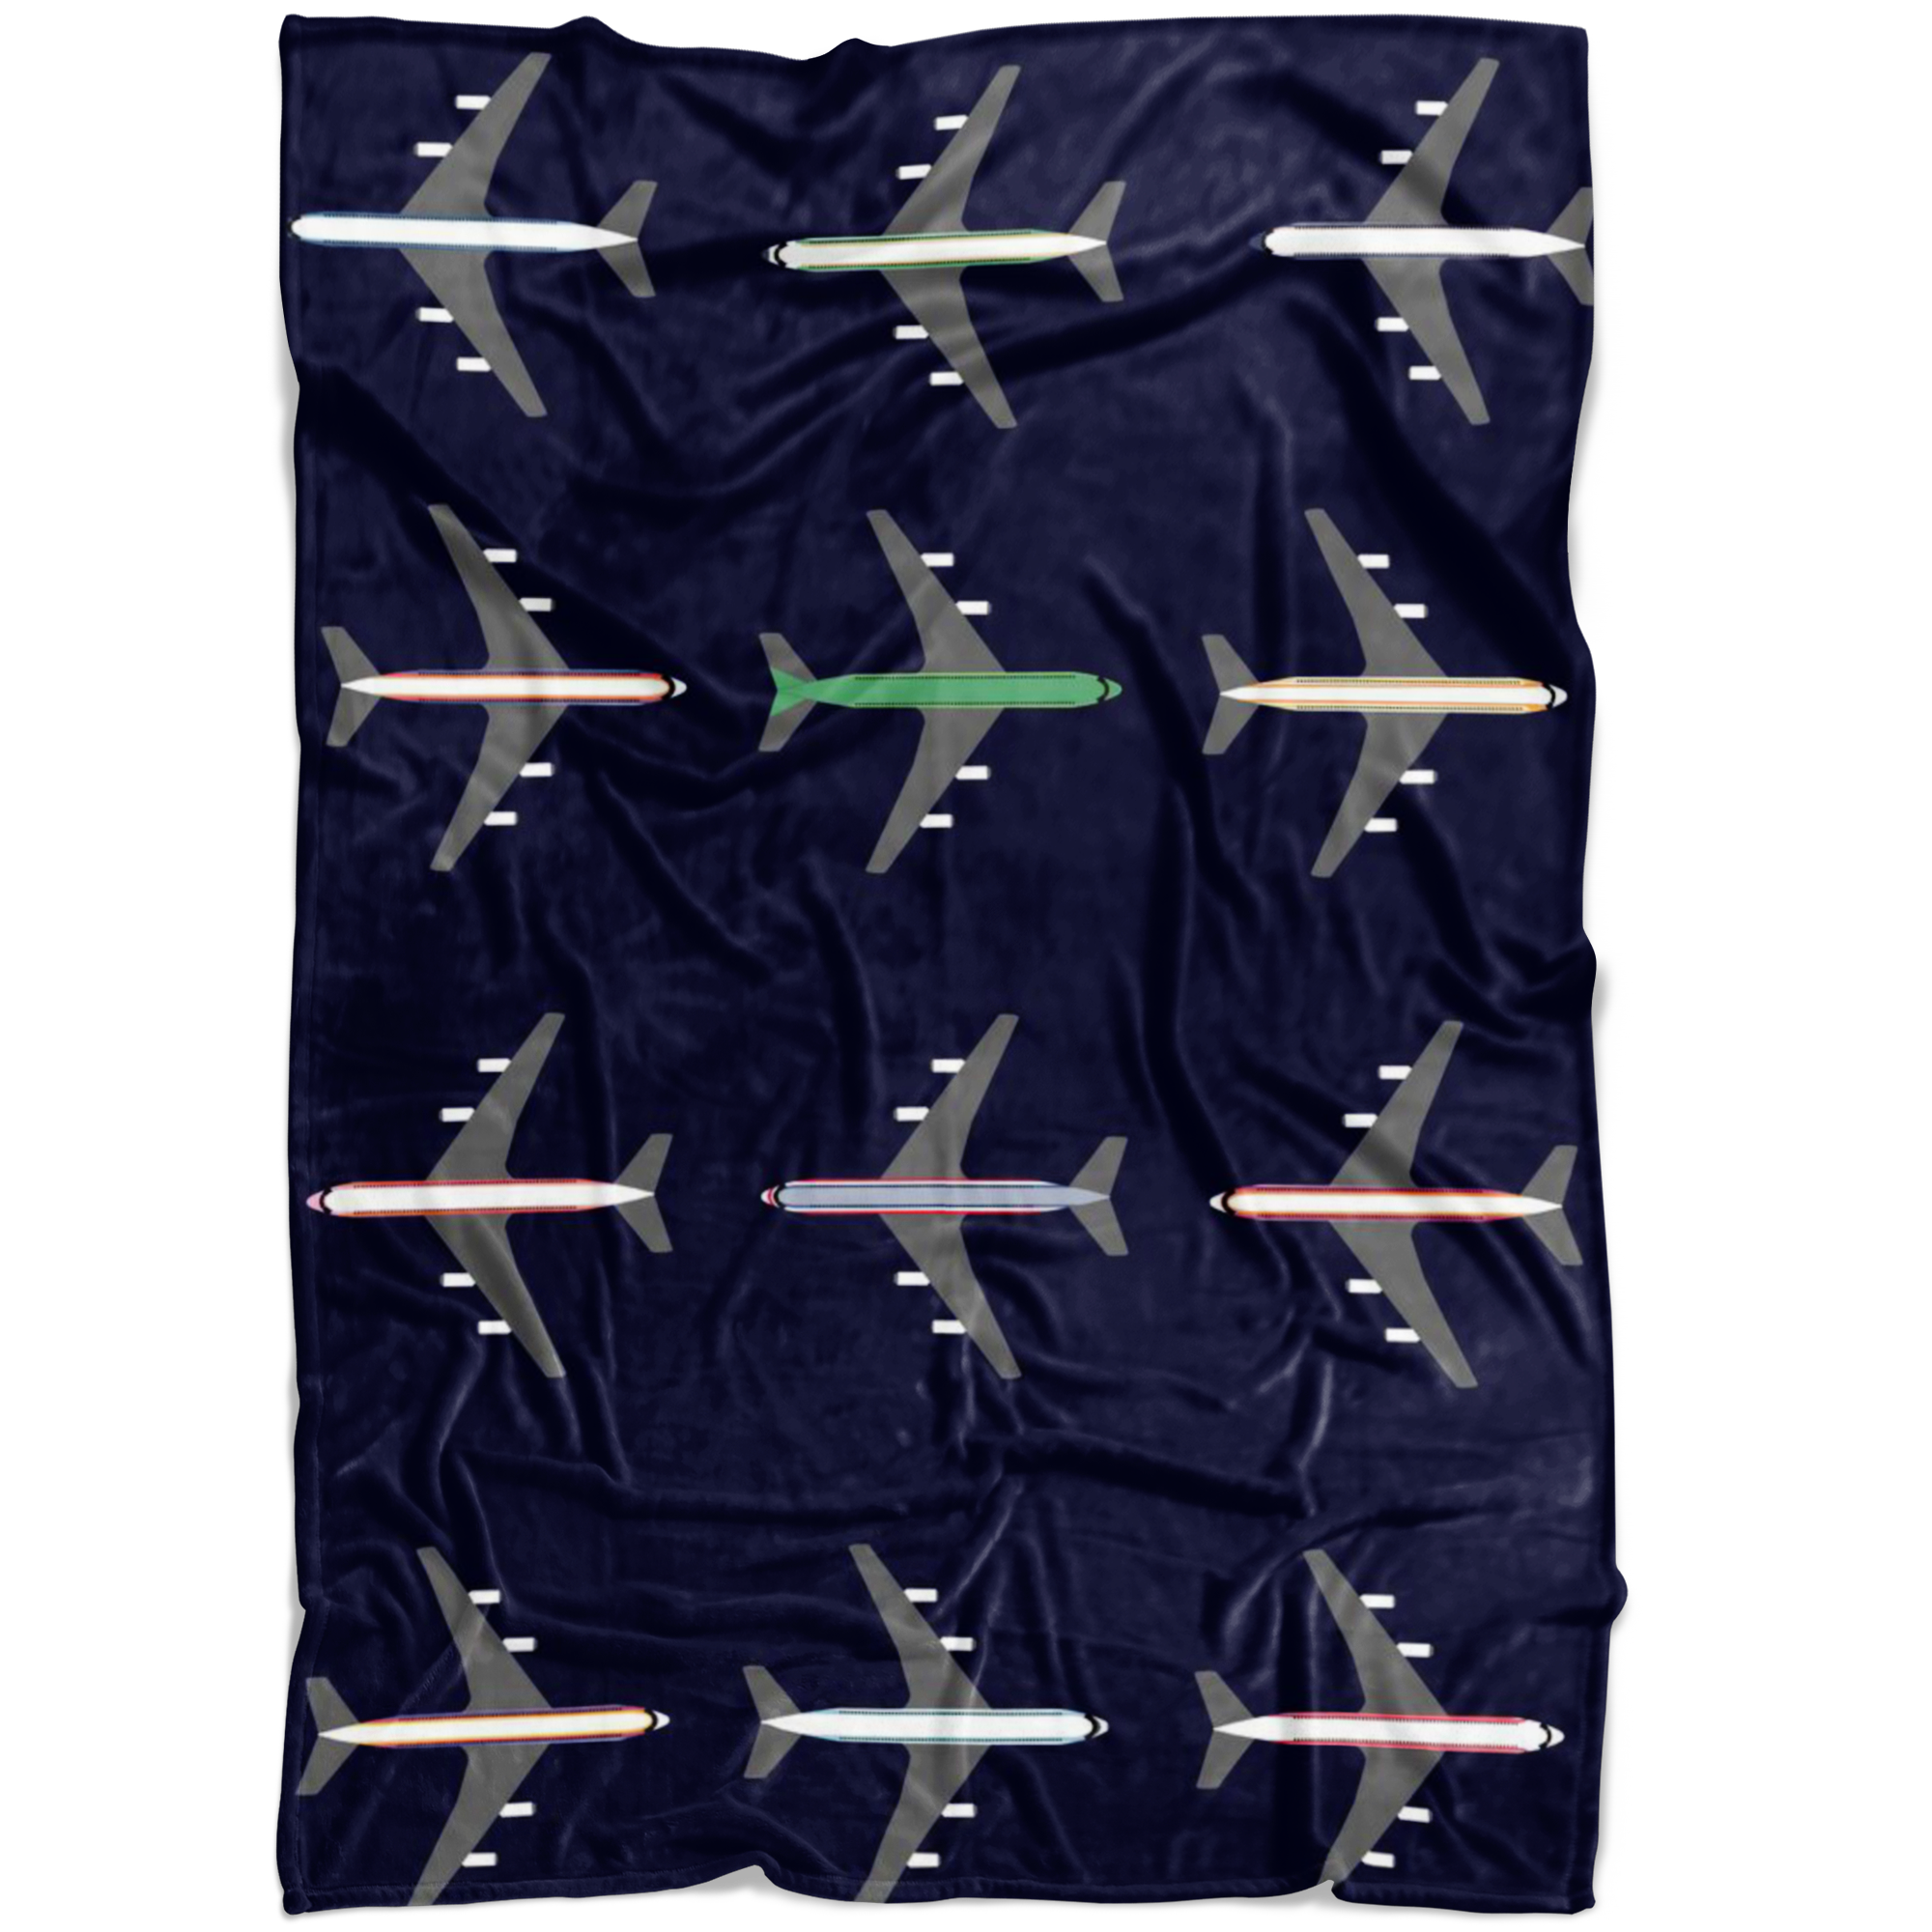 The Jet Blanket